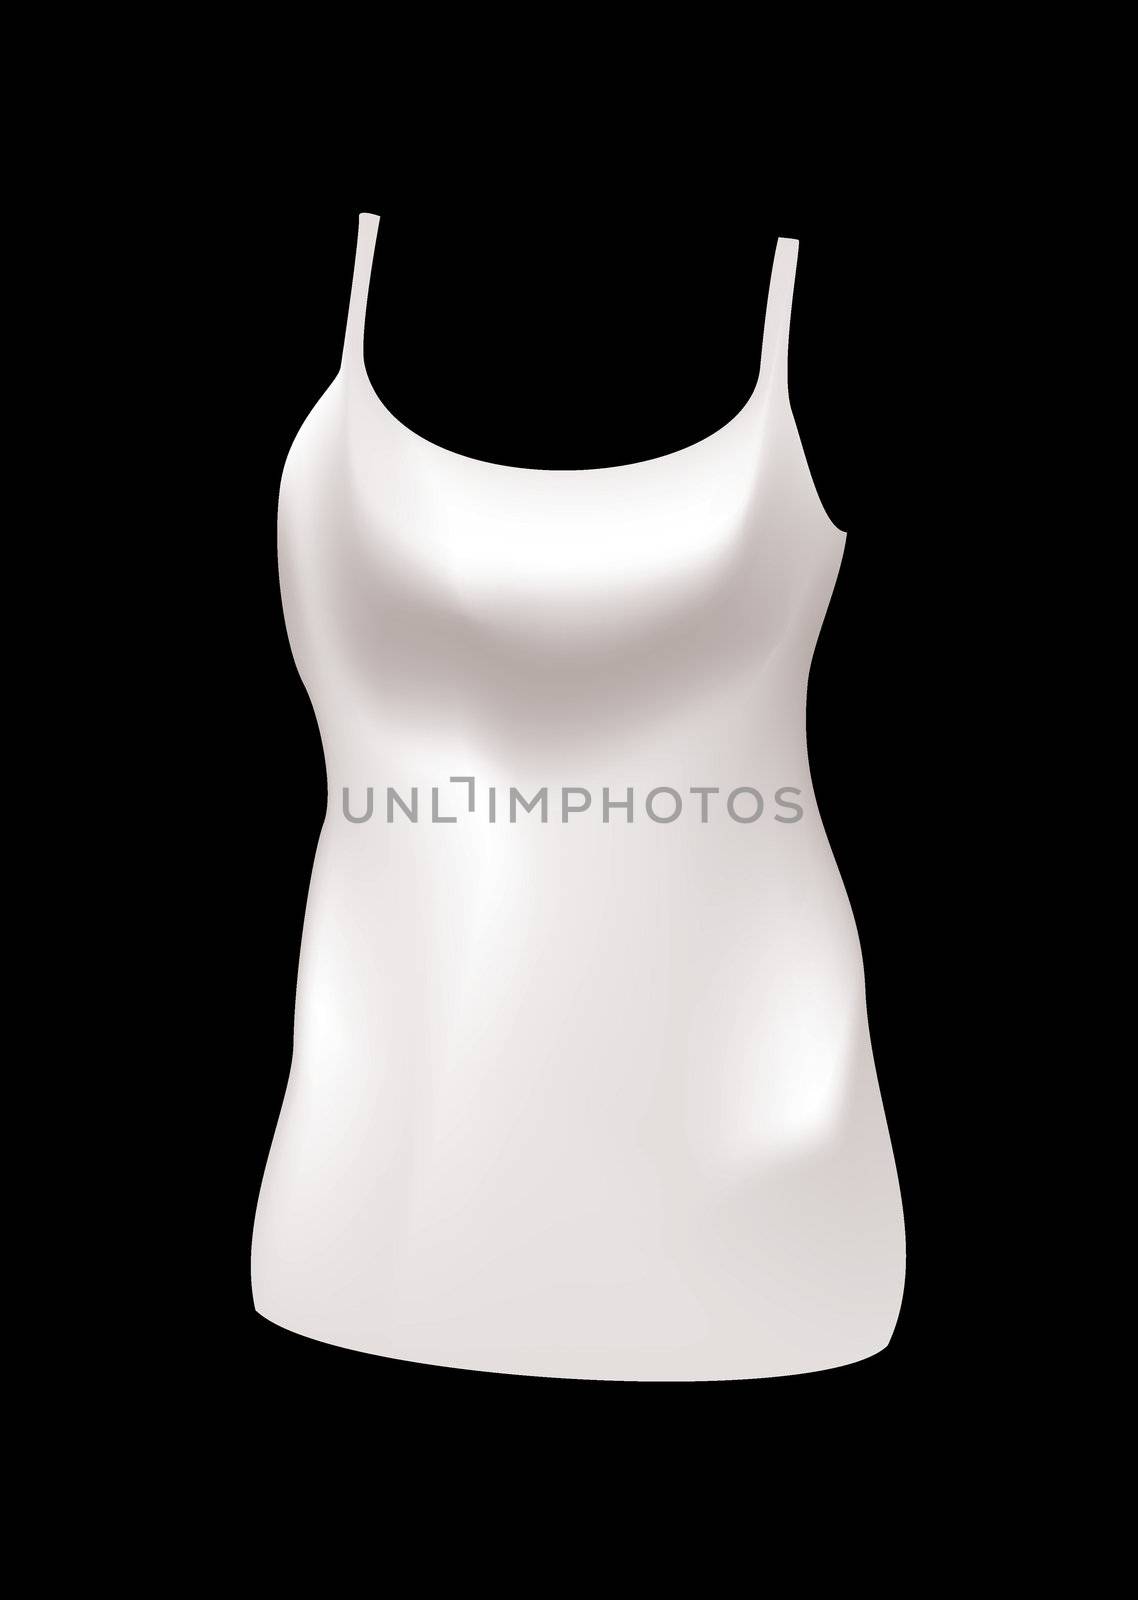 Plain white female vest top with black background